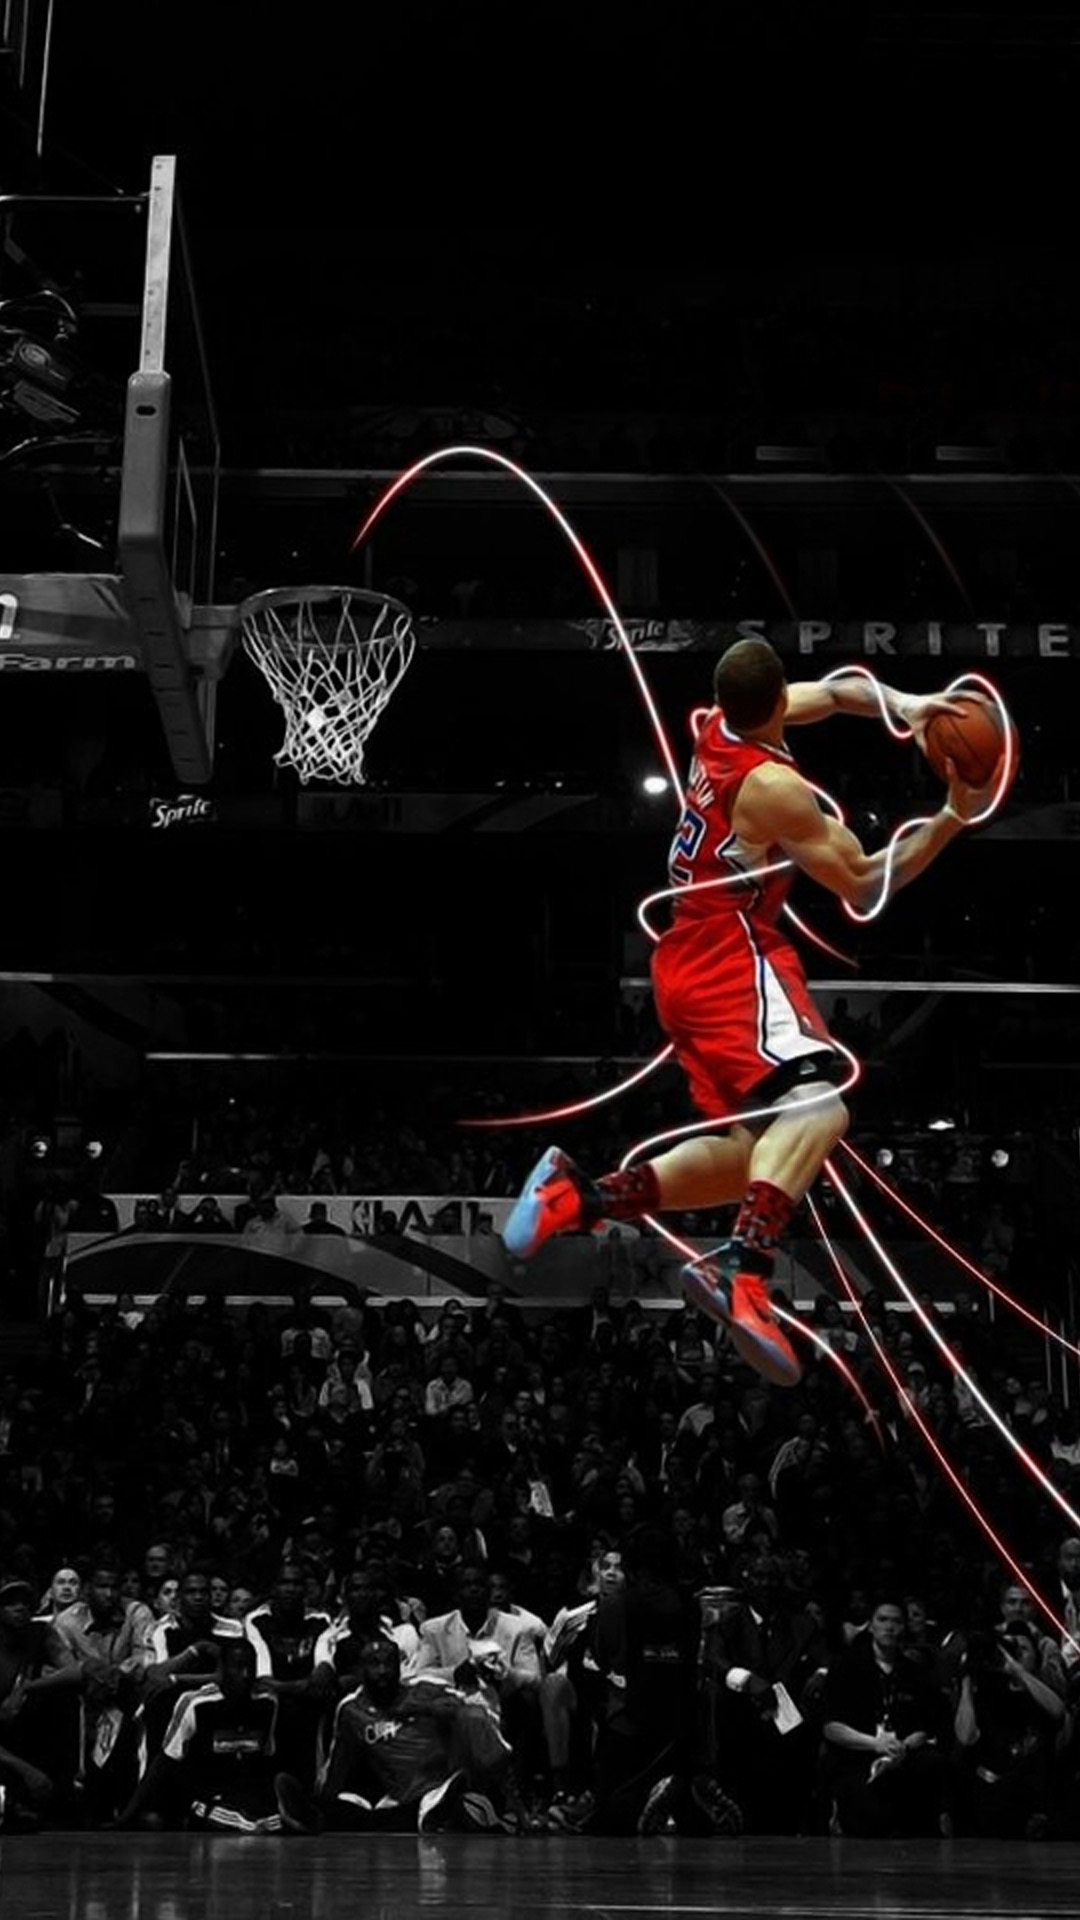 griffin wallpaper,basketball player,slam dunk,basketball moves,sports,basketball